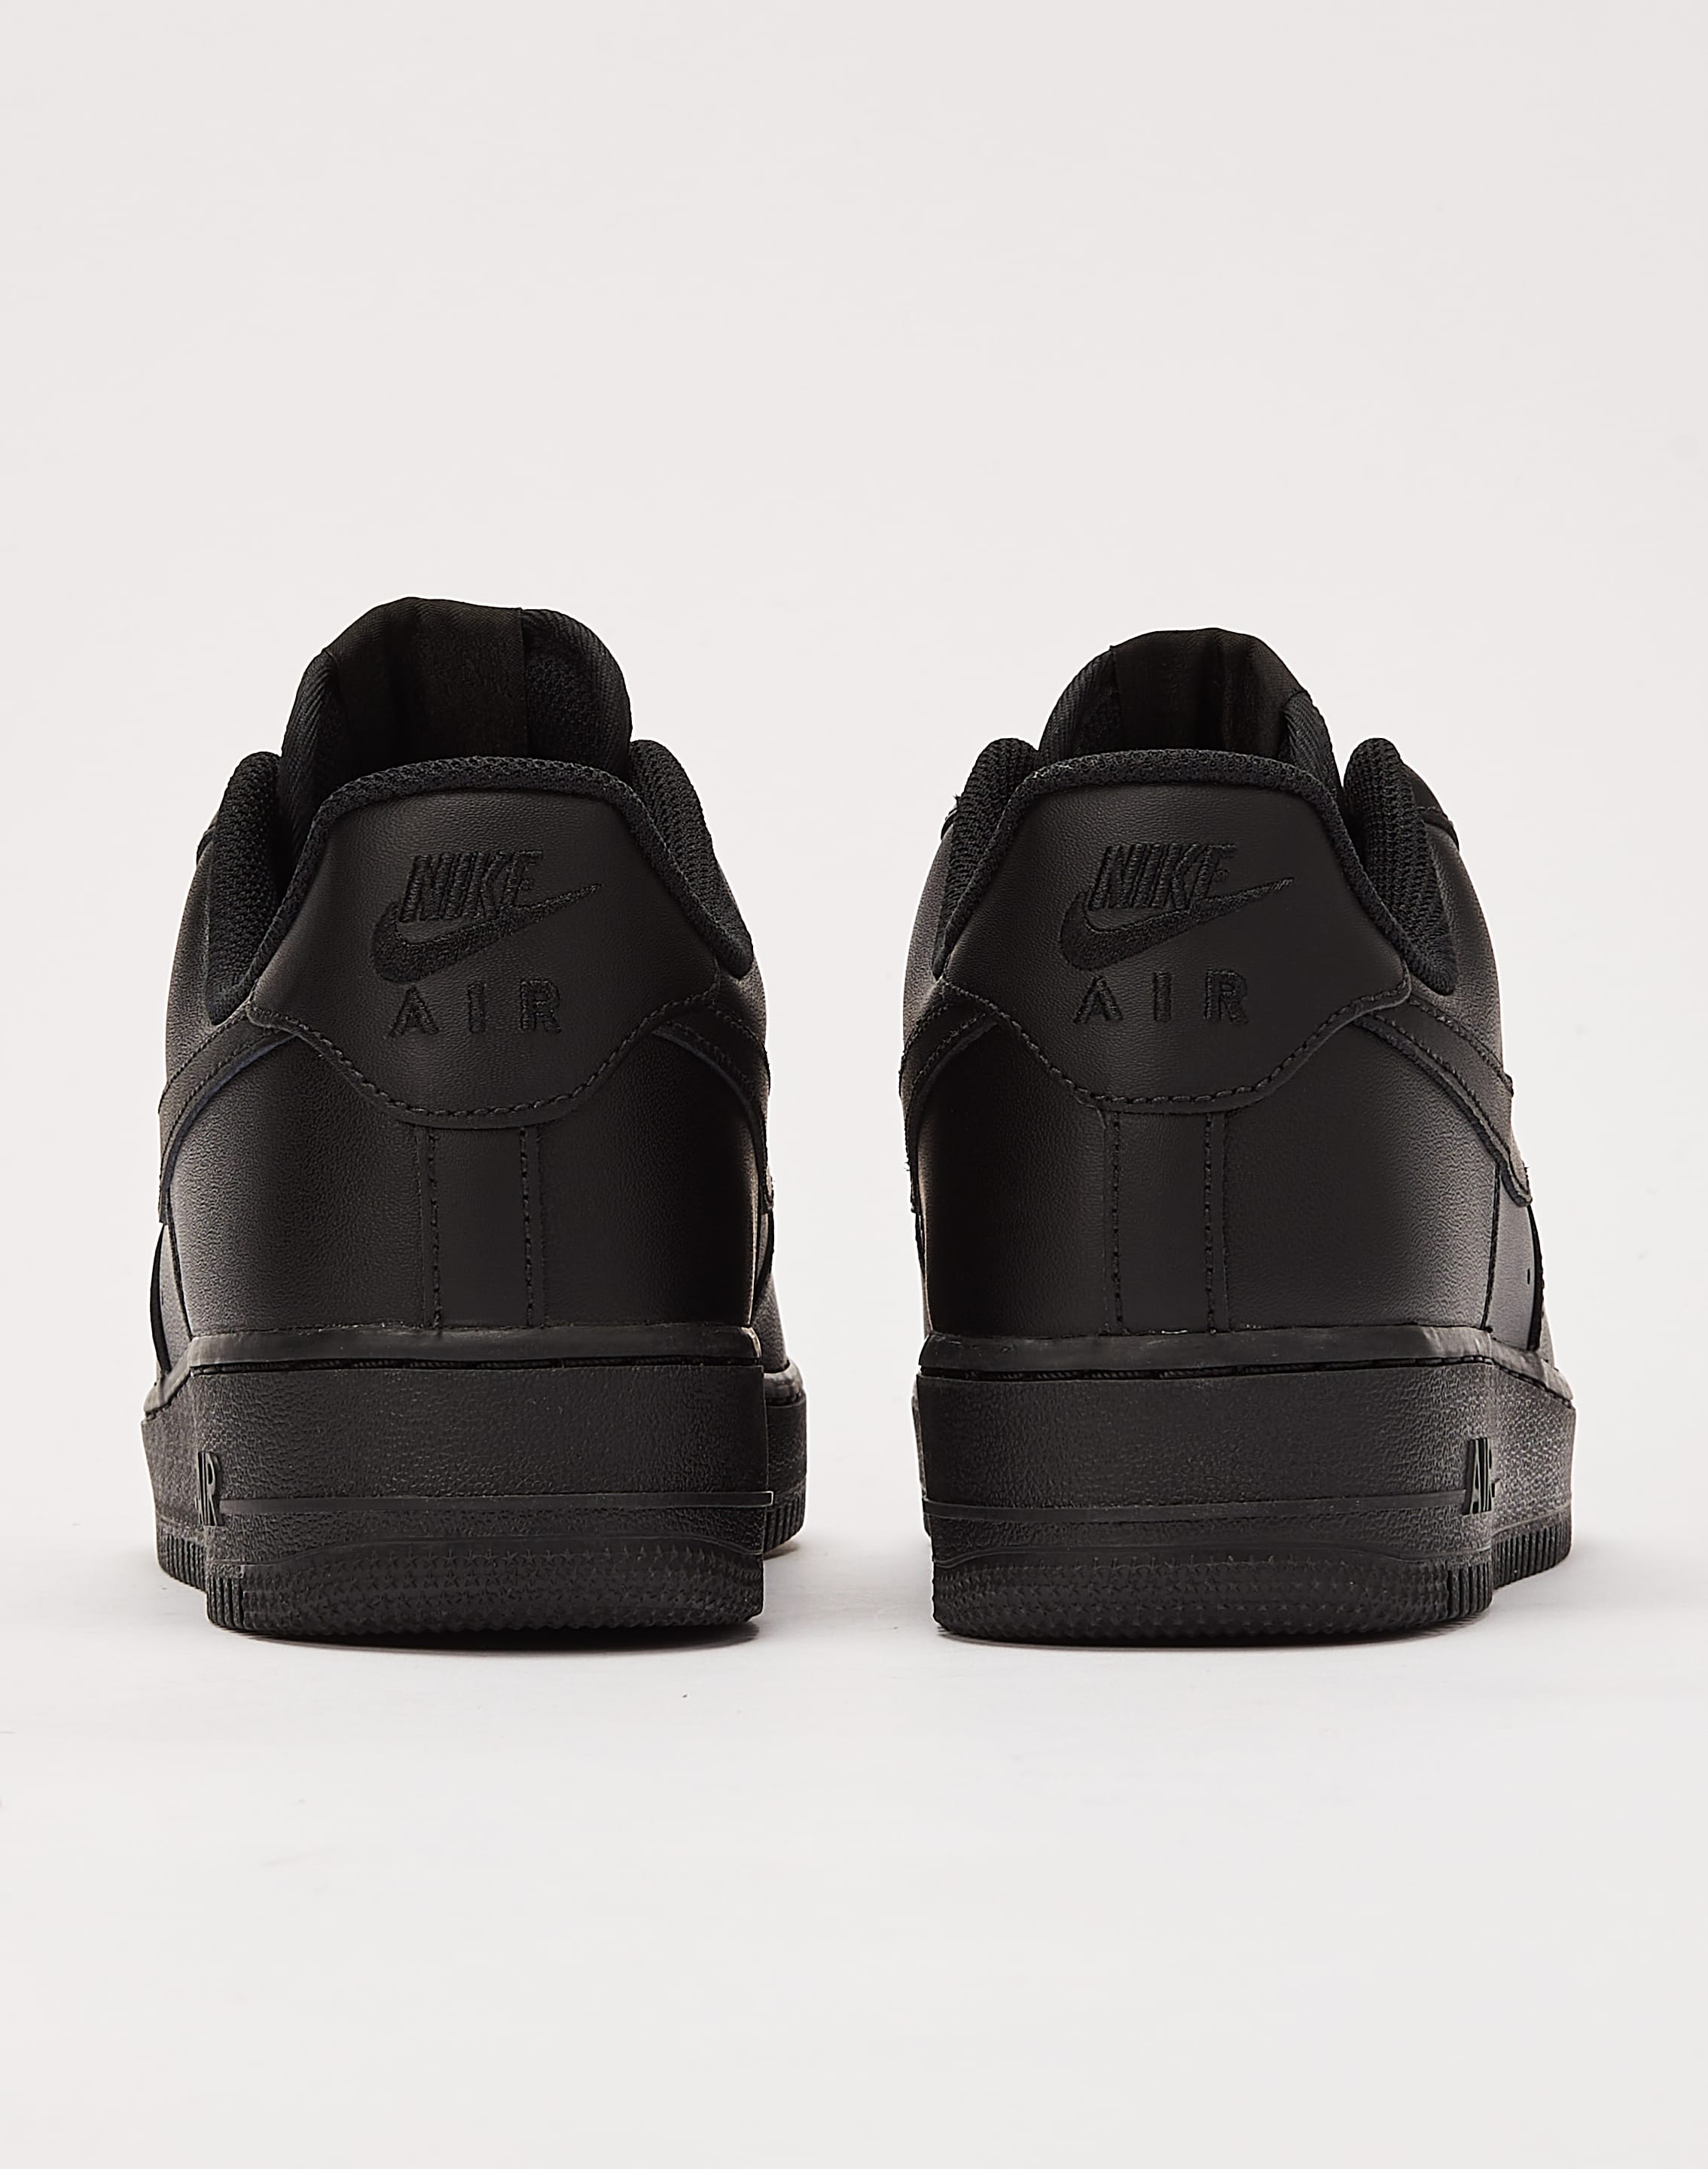 Air Force 1 '07 'Triple Black' - Nike - CW2288 001 - black/black/black